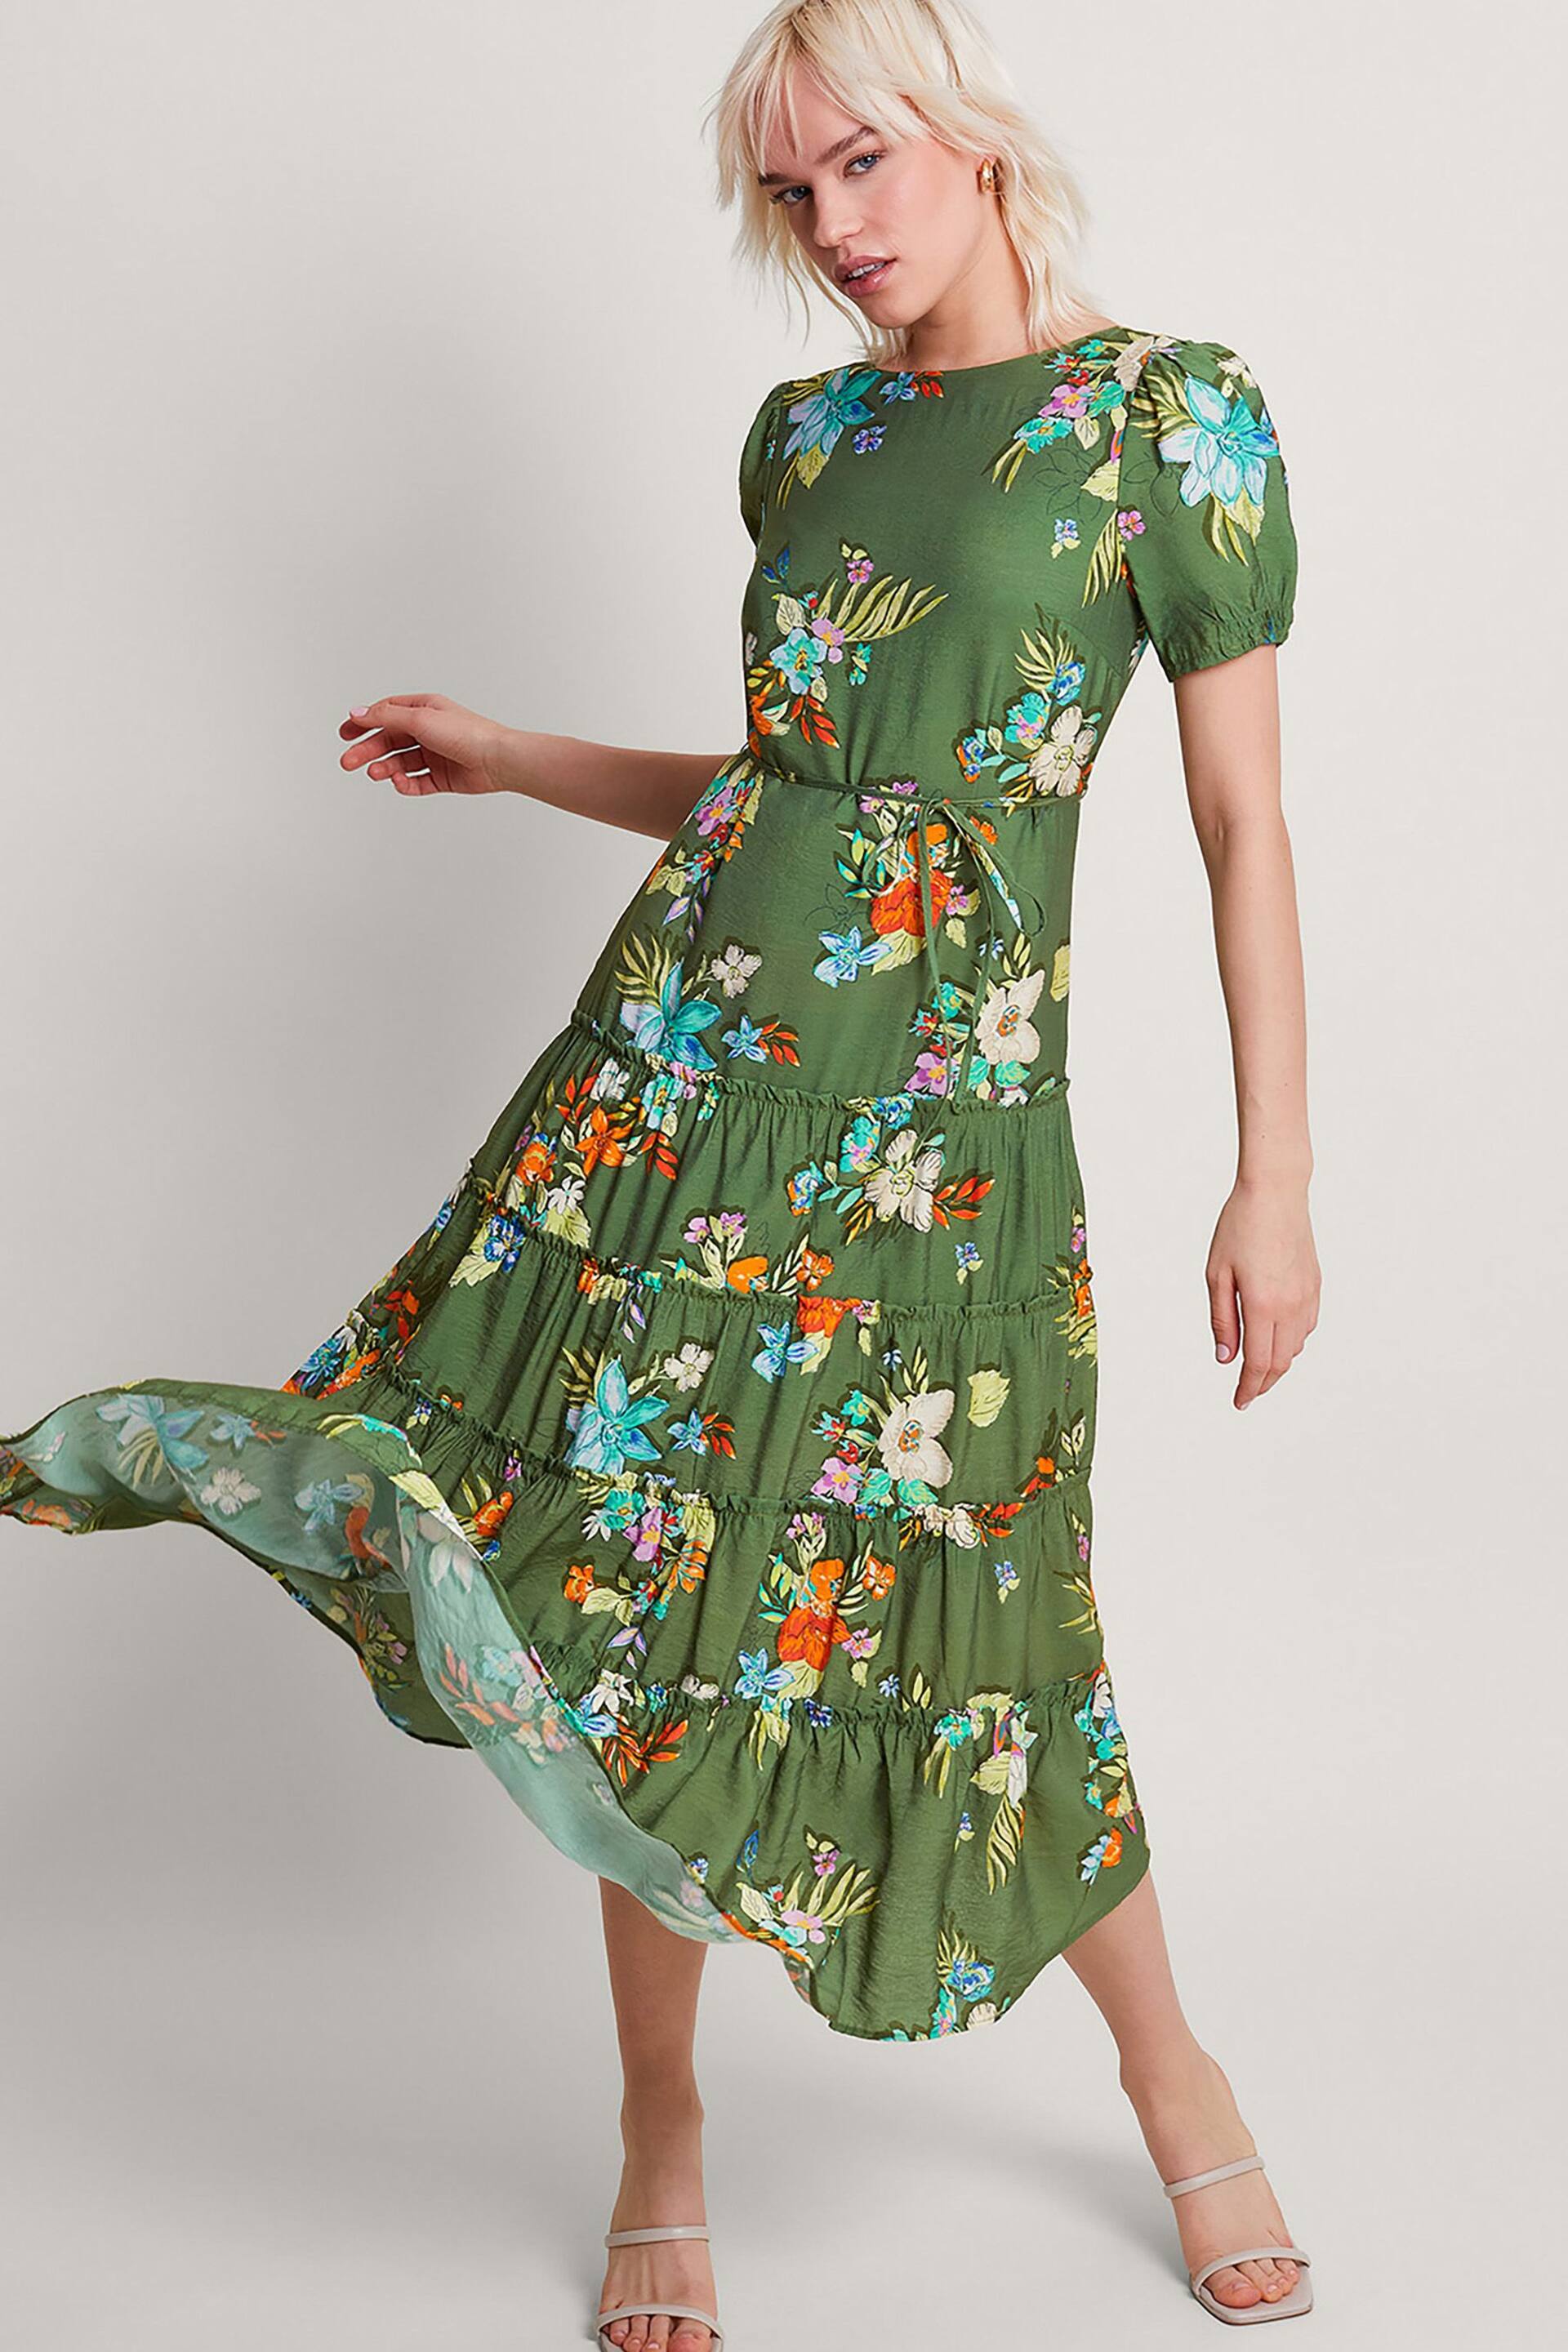 Monsoon Green Zafia Tiered Dress - Image 1 of 5